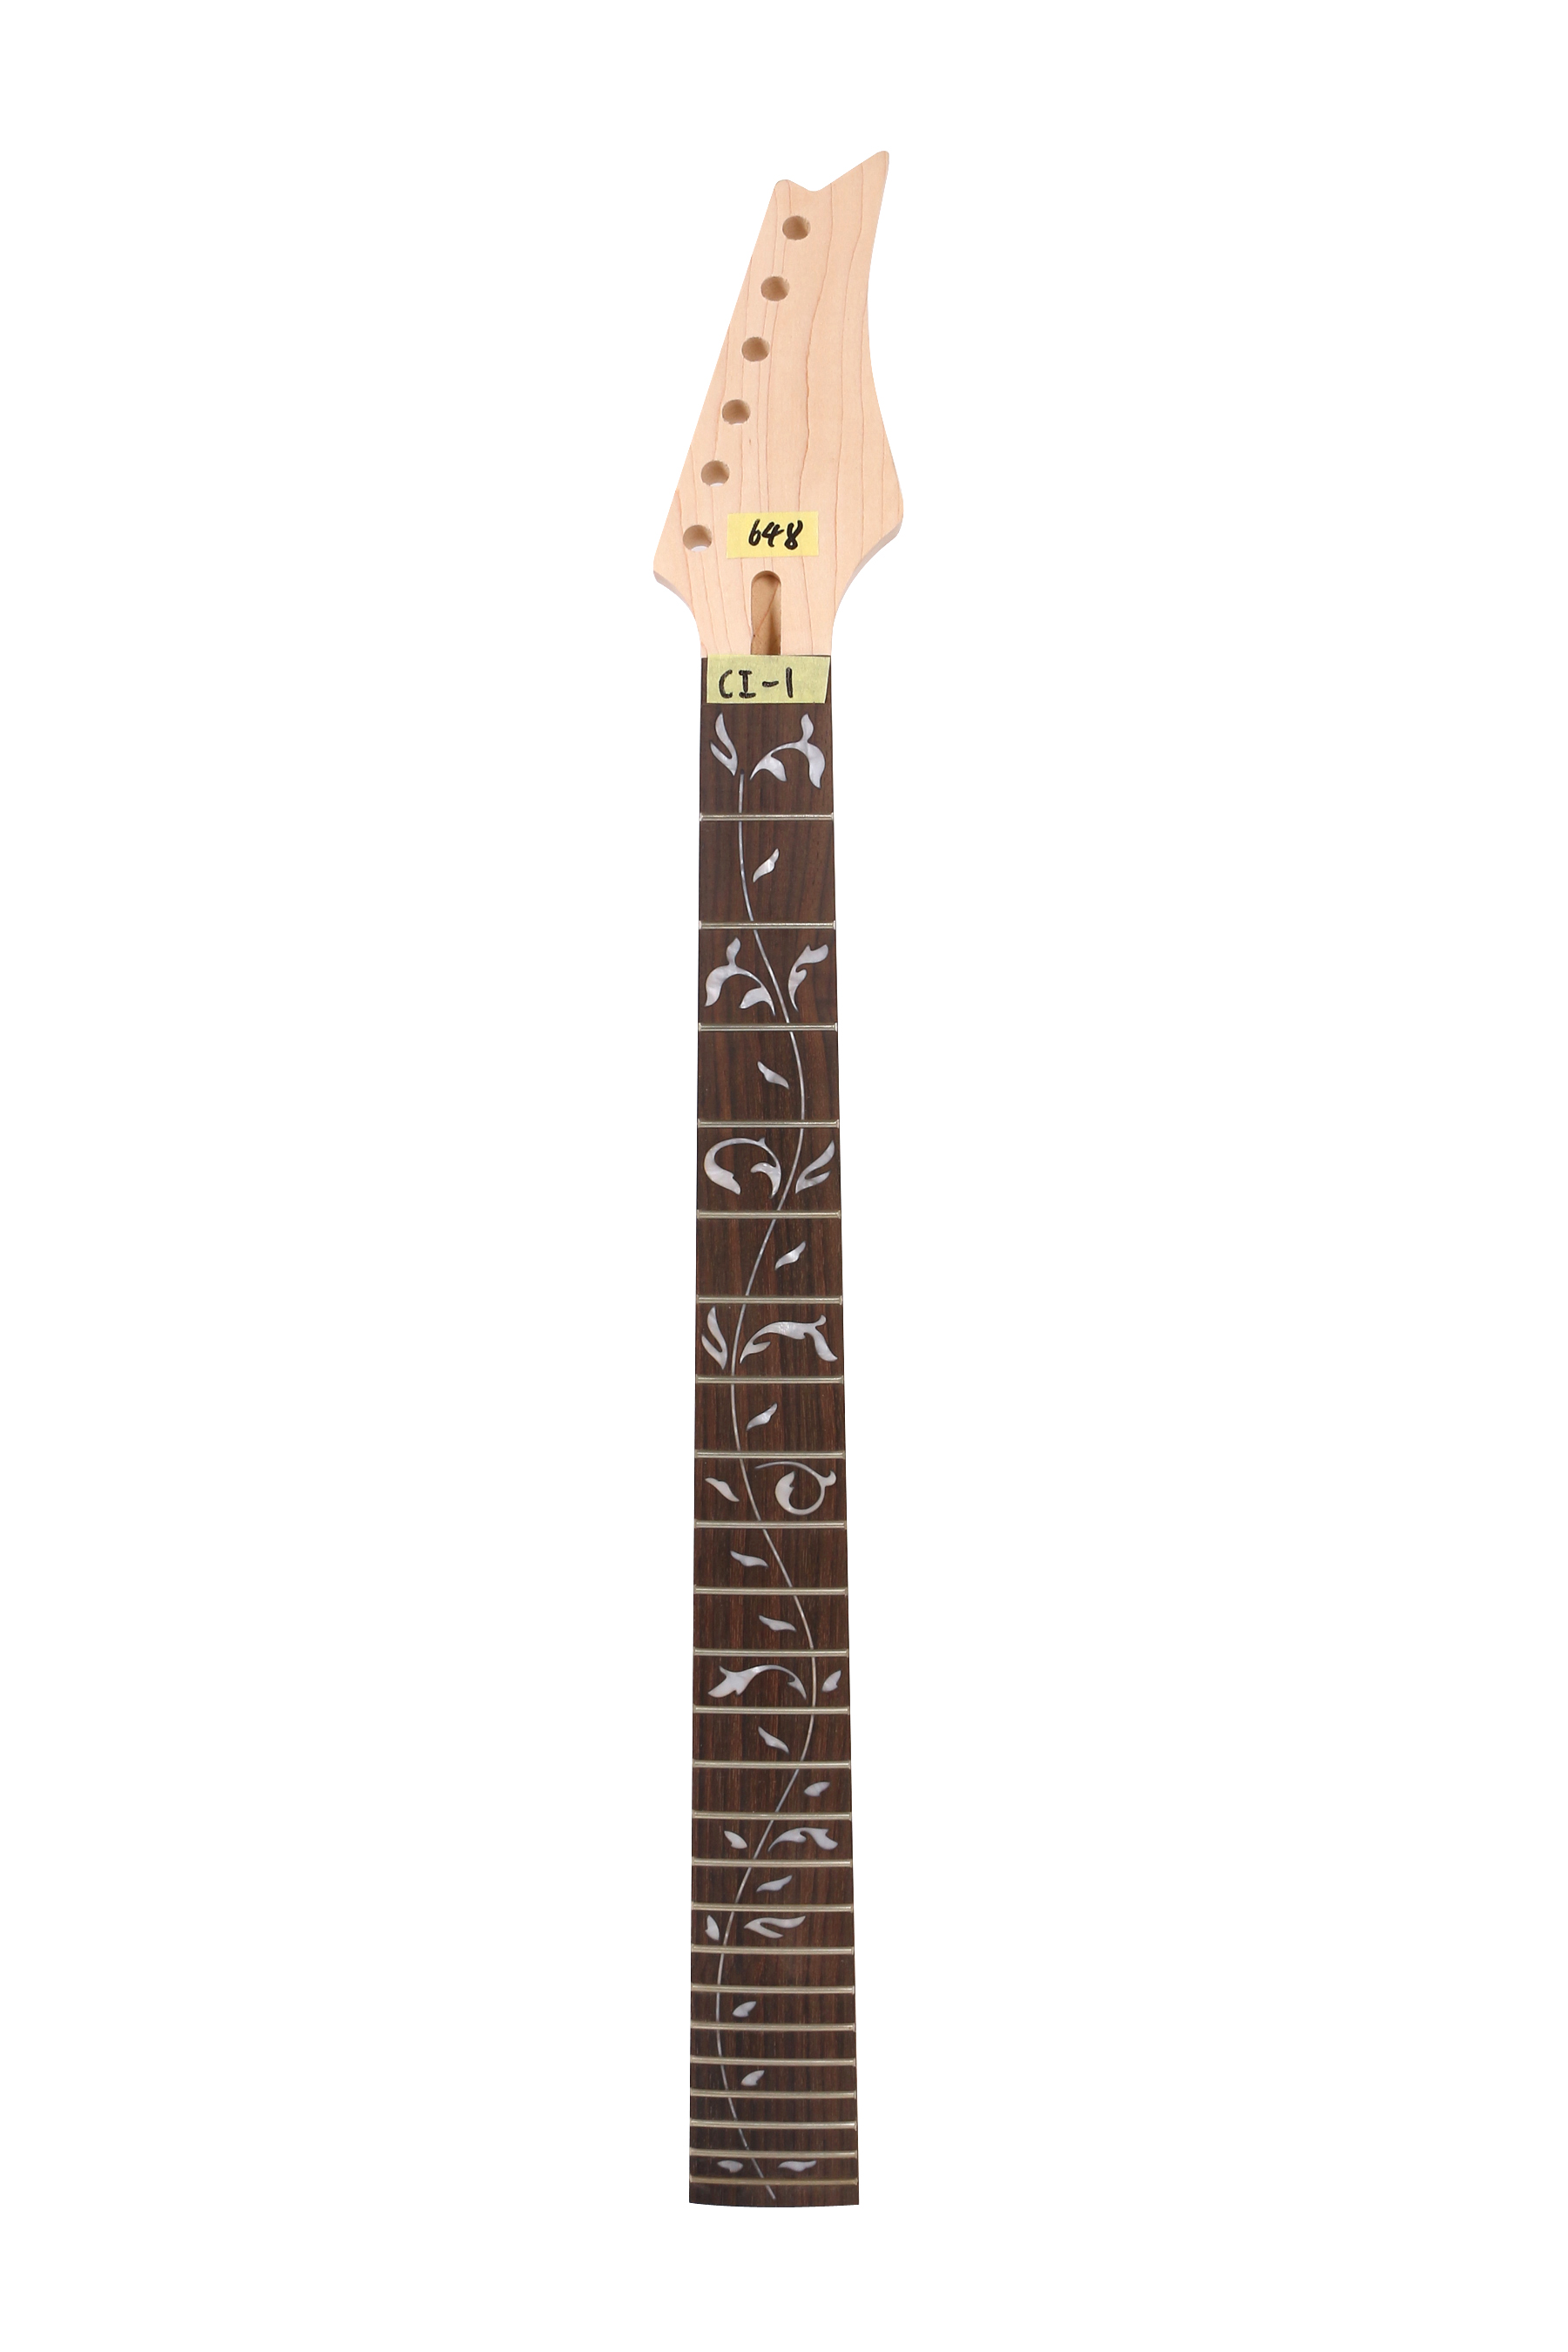  Maple Guitar Neck 24fret 25.5inch Rosewood Fretboard Fit Ibanez Guitar for derzweifelhafte 